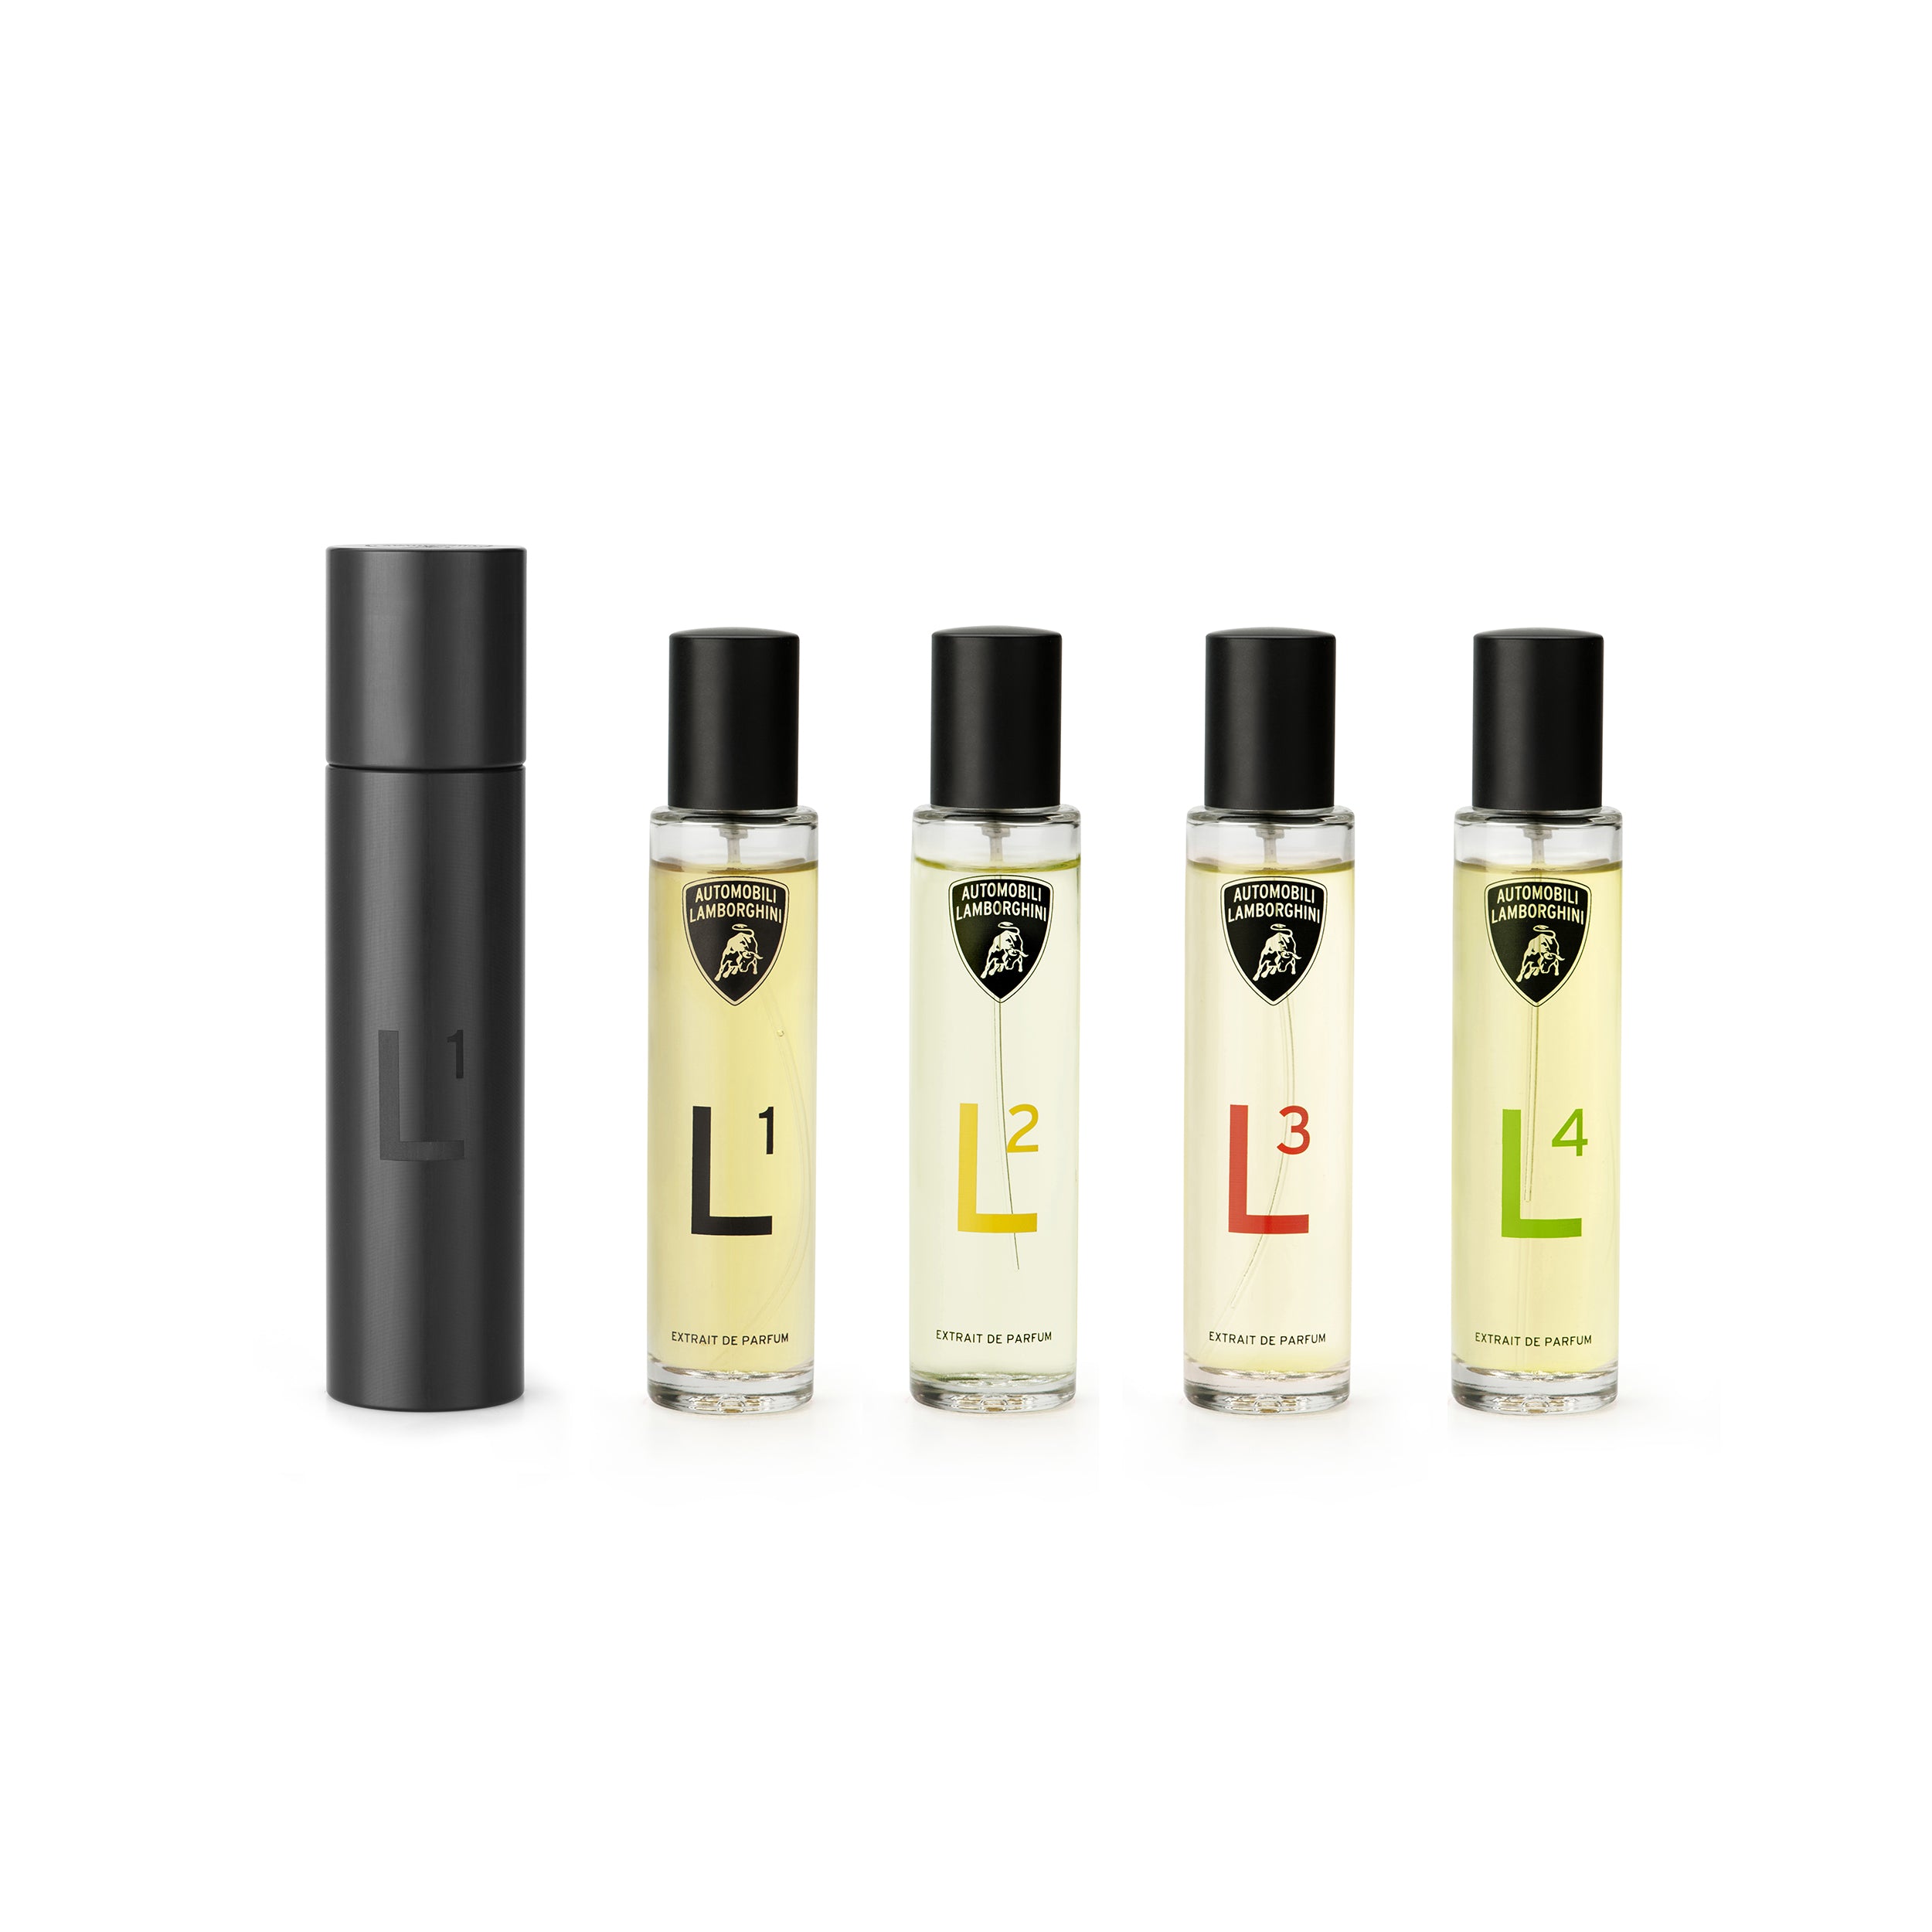 L1, L2, L3, L4, Lamborghini - Avery Perfume Gallery